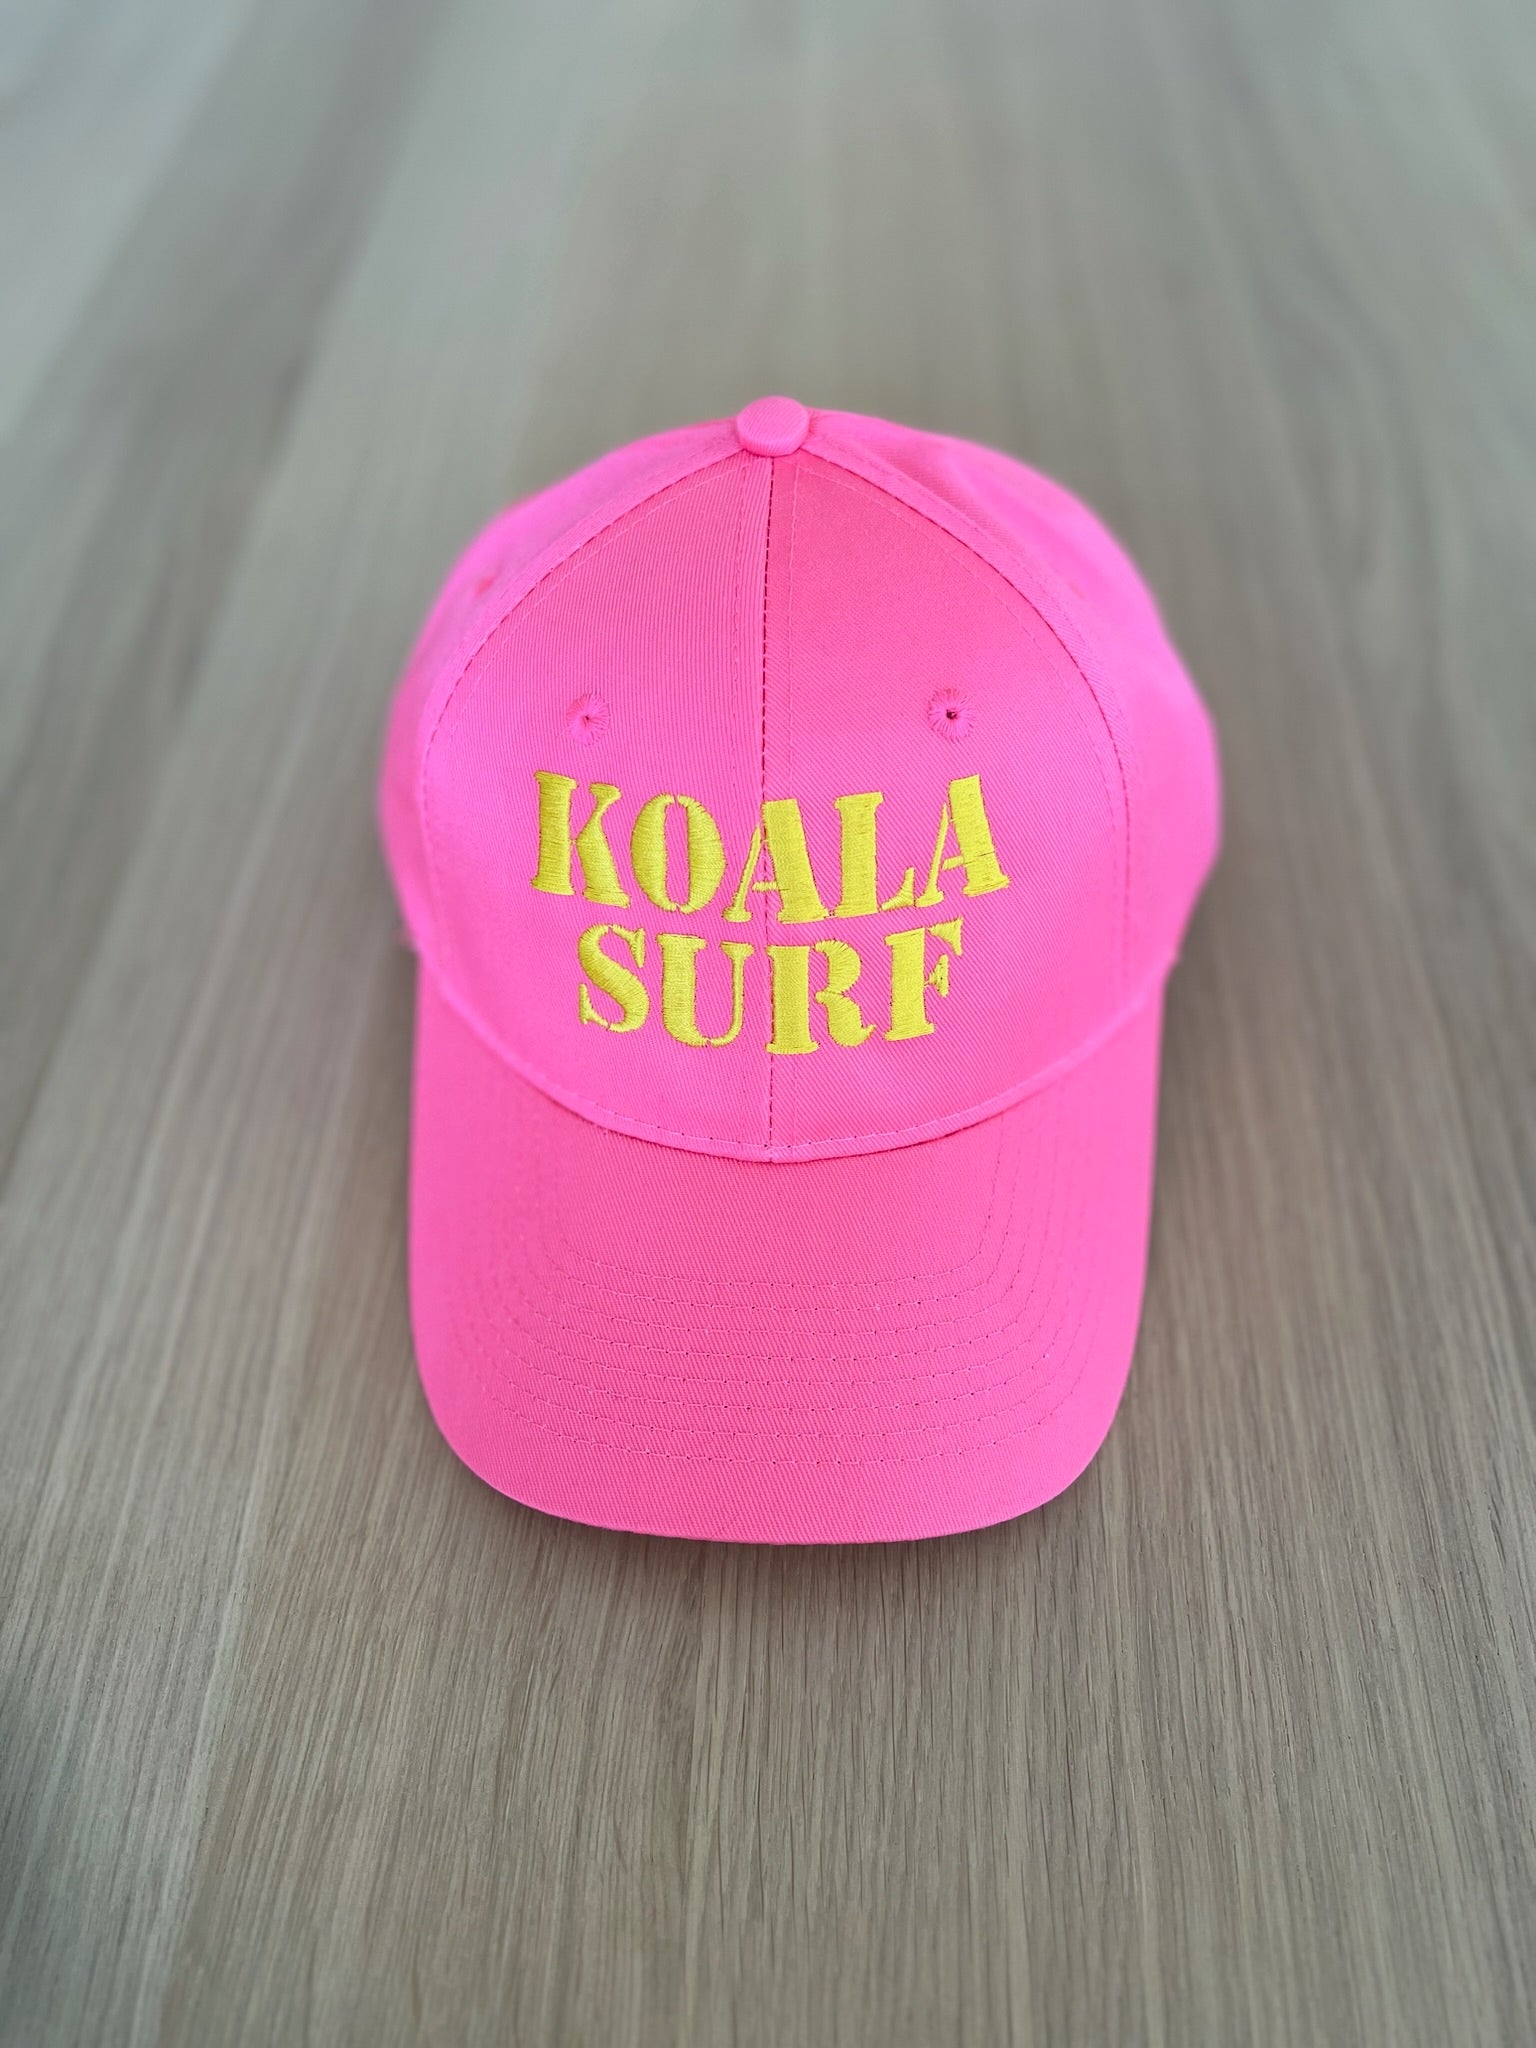 SPECIAL PREORDER! Koala Baseball Caps - "KOALA SURF" in Watermelon & Yellow - Quilted Koala